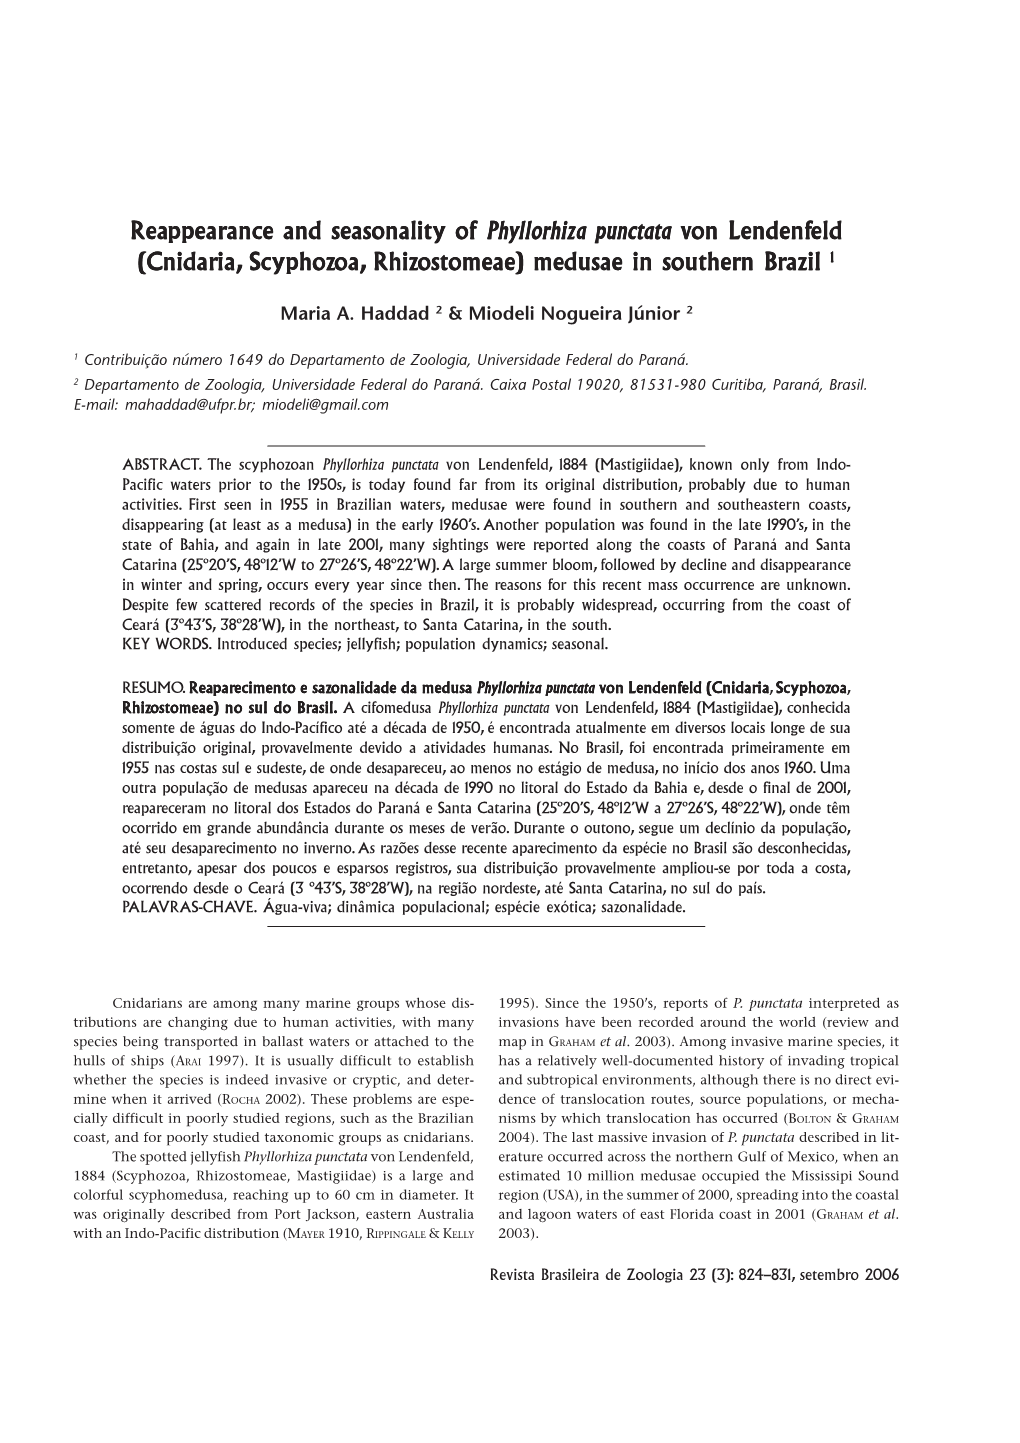 Reappearance and Seasonality of Phyllorhiza Punctata Von Lendenfeld (Cnidaria, Scyphozoa, Rhizostomeae) Medusae in Southern Brazil 1